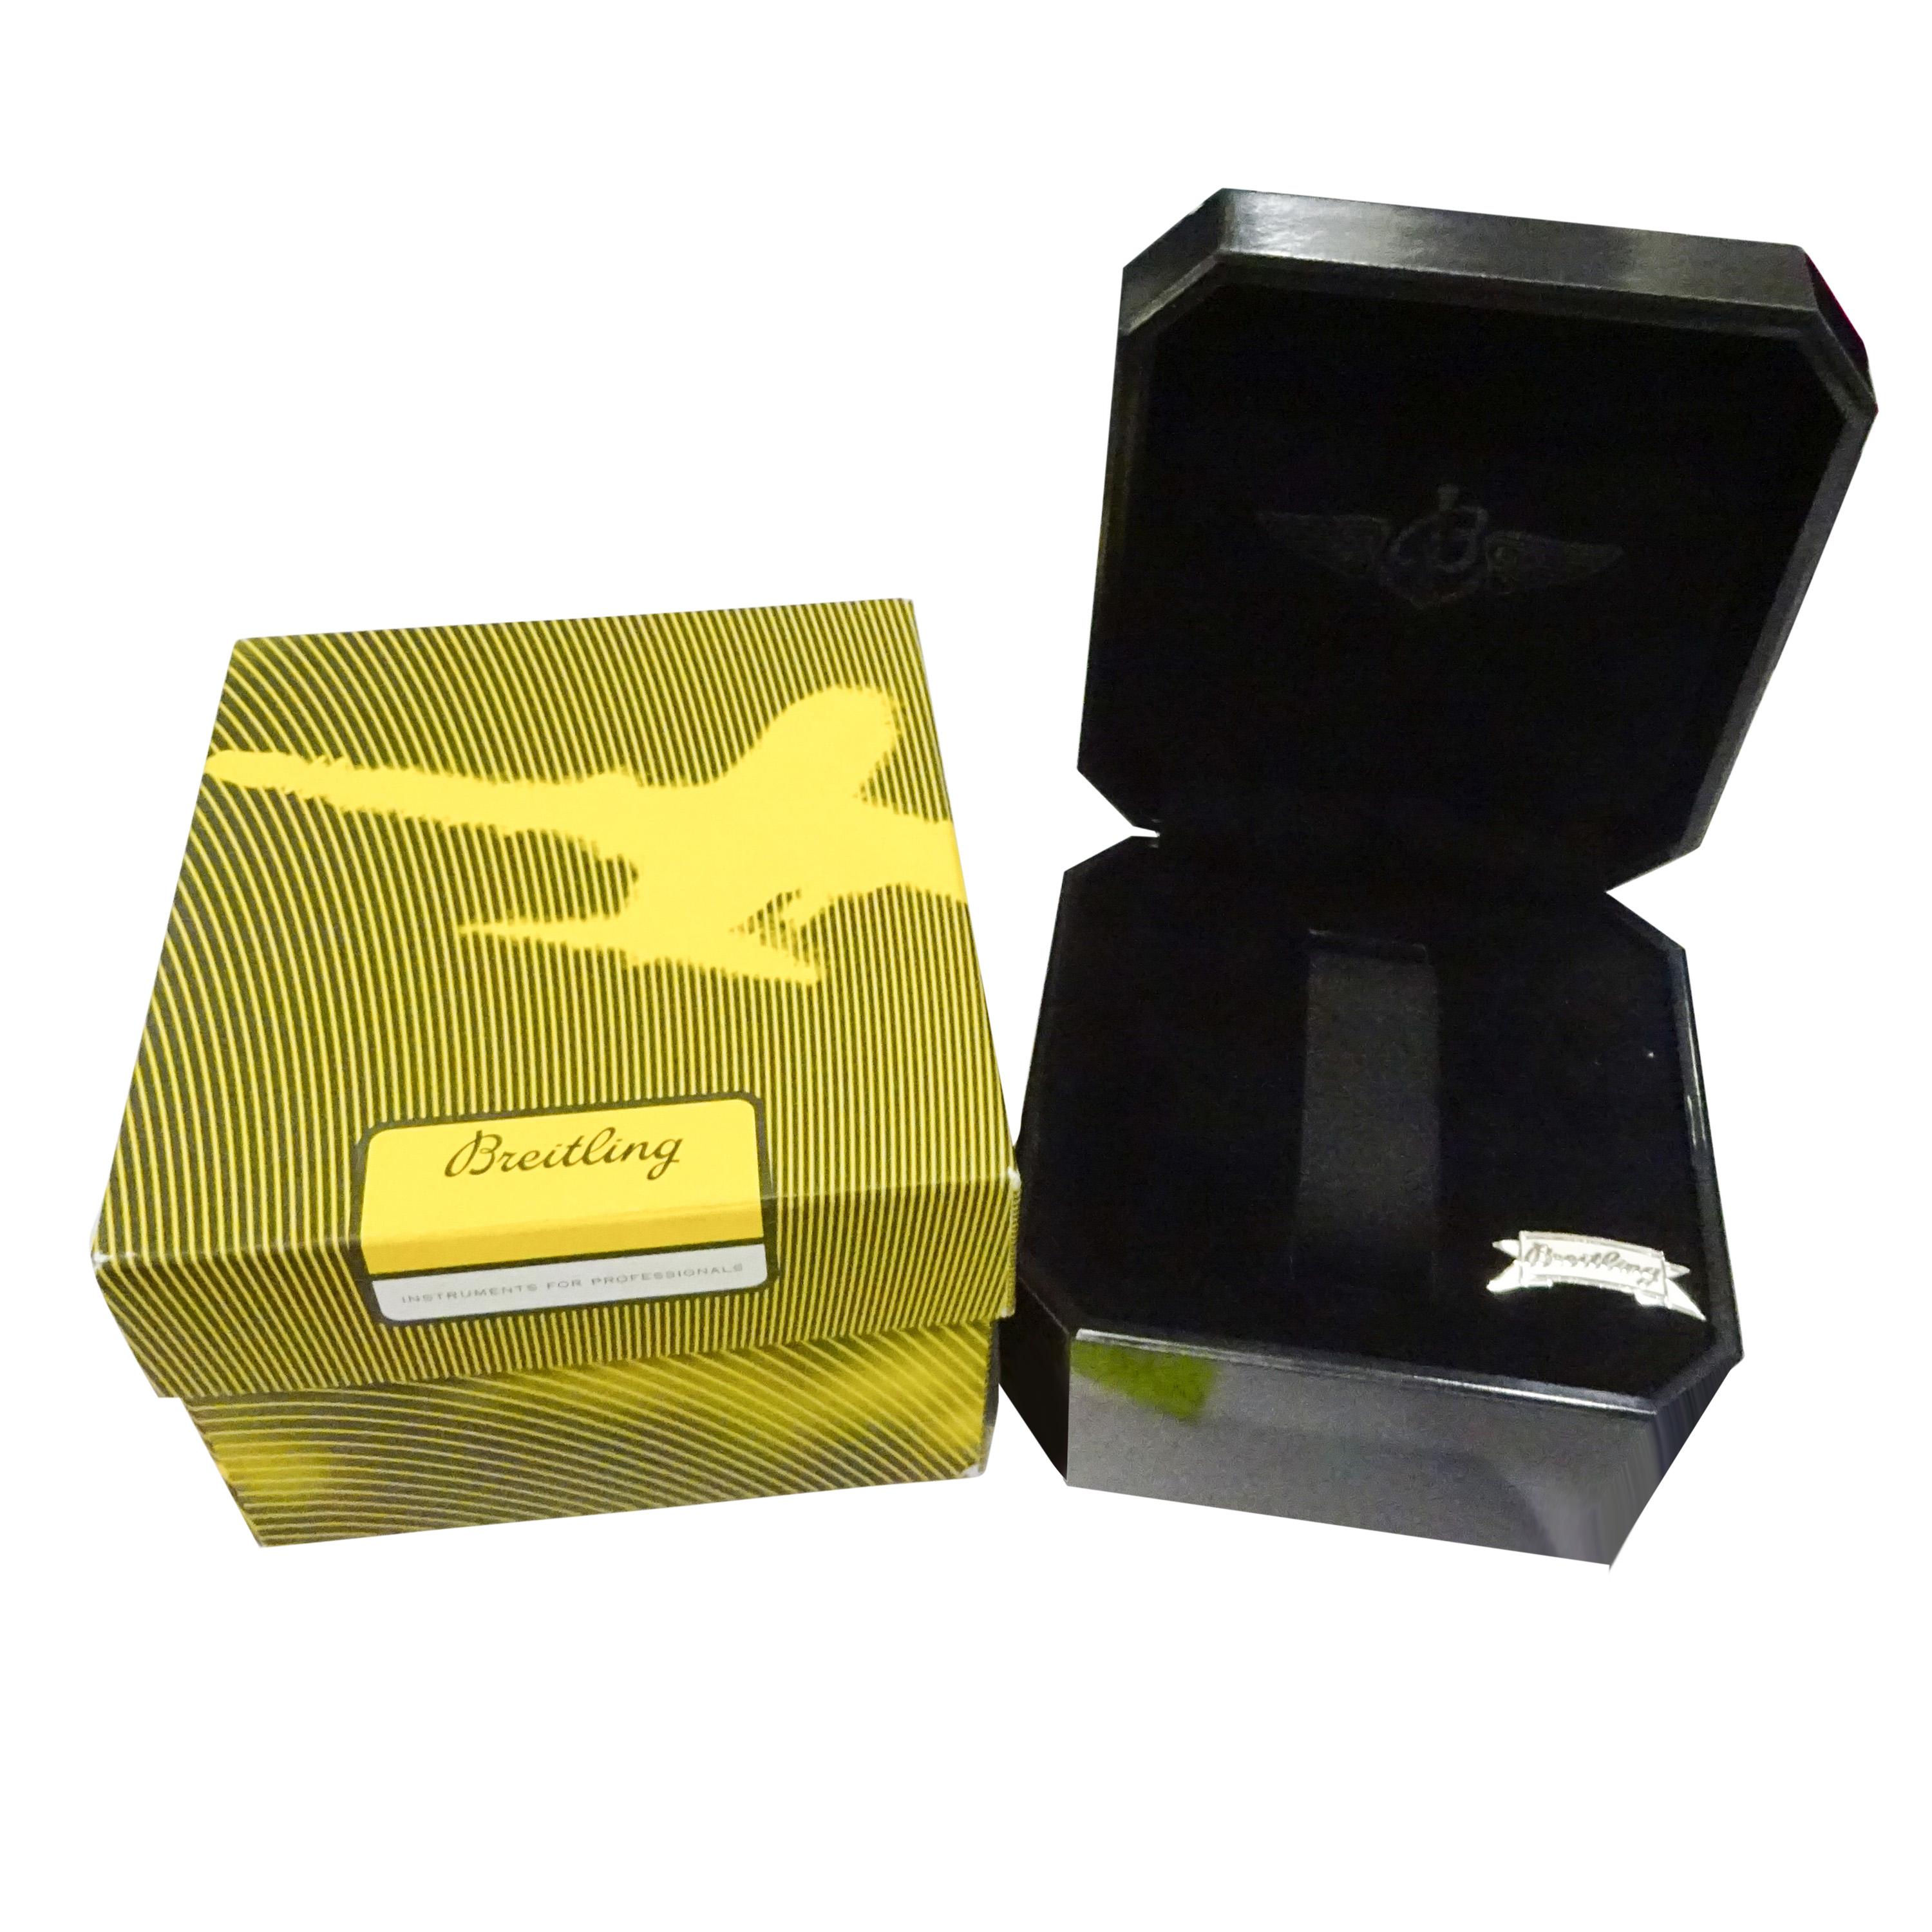 Breitling Sextant K55046 Unisex Watch in 18 Karat Yellow Gold For Sale ...